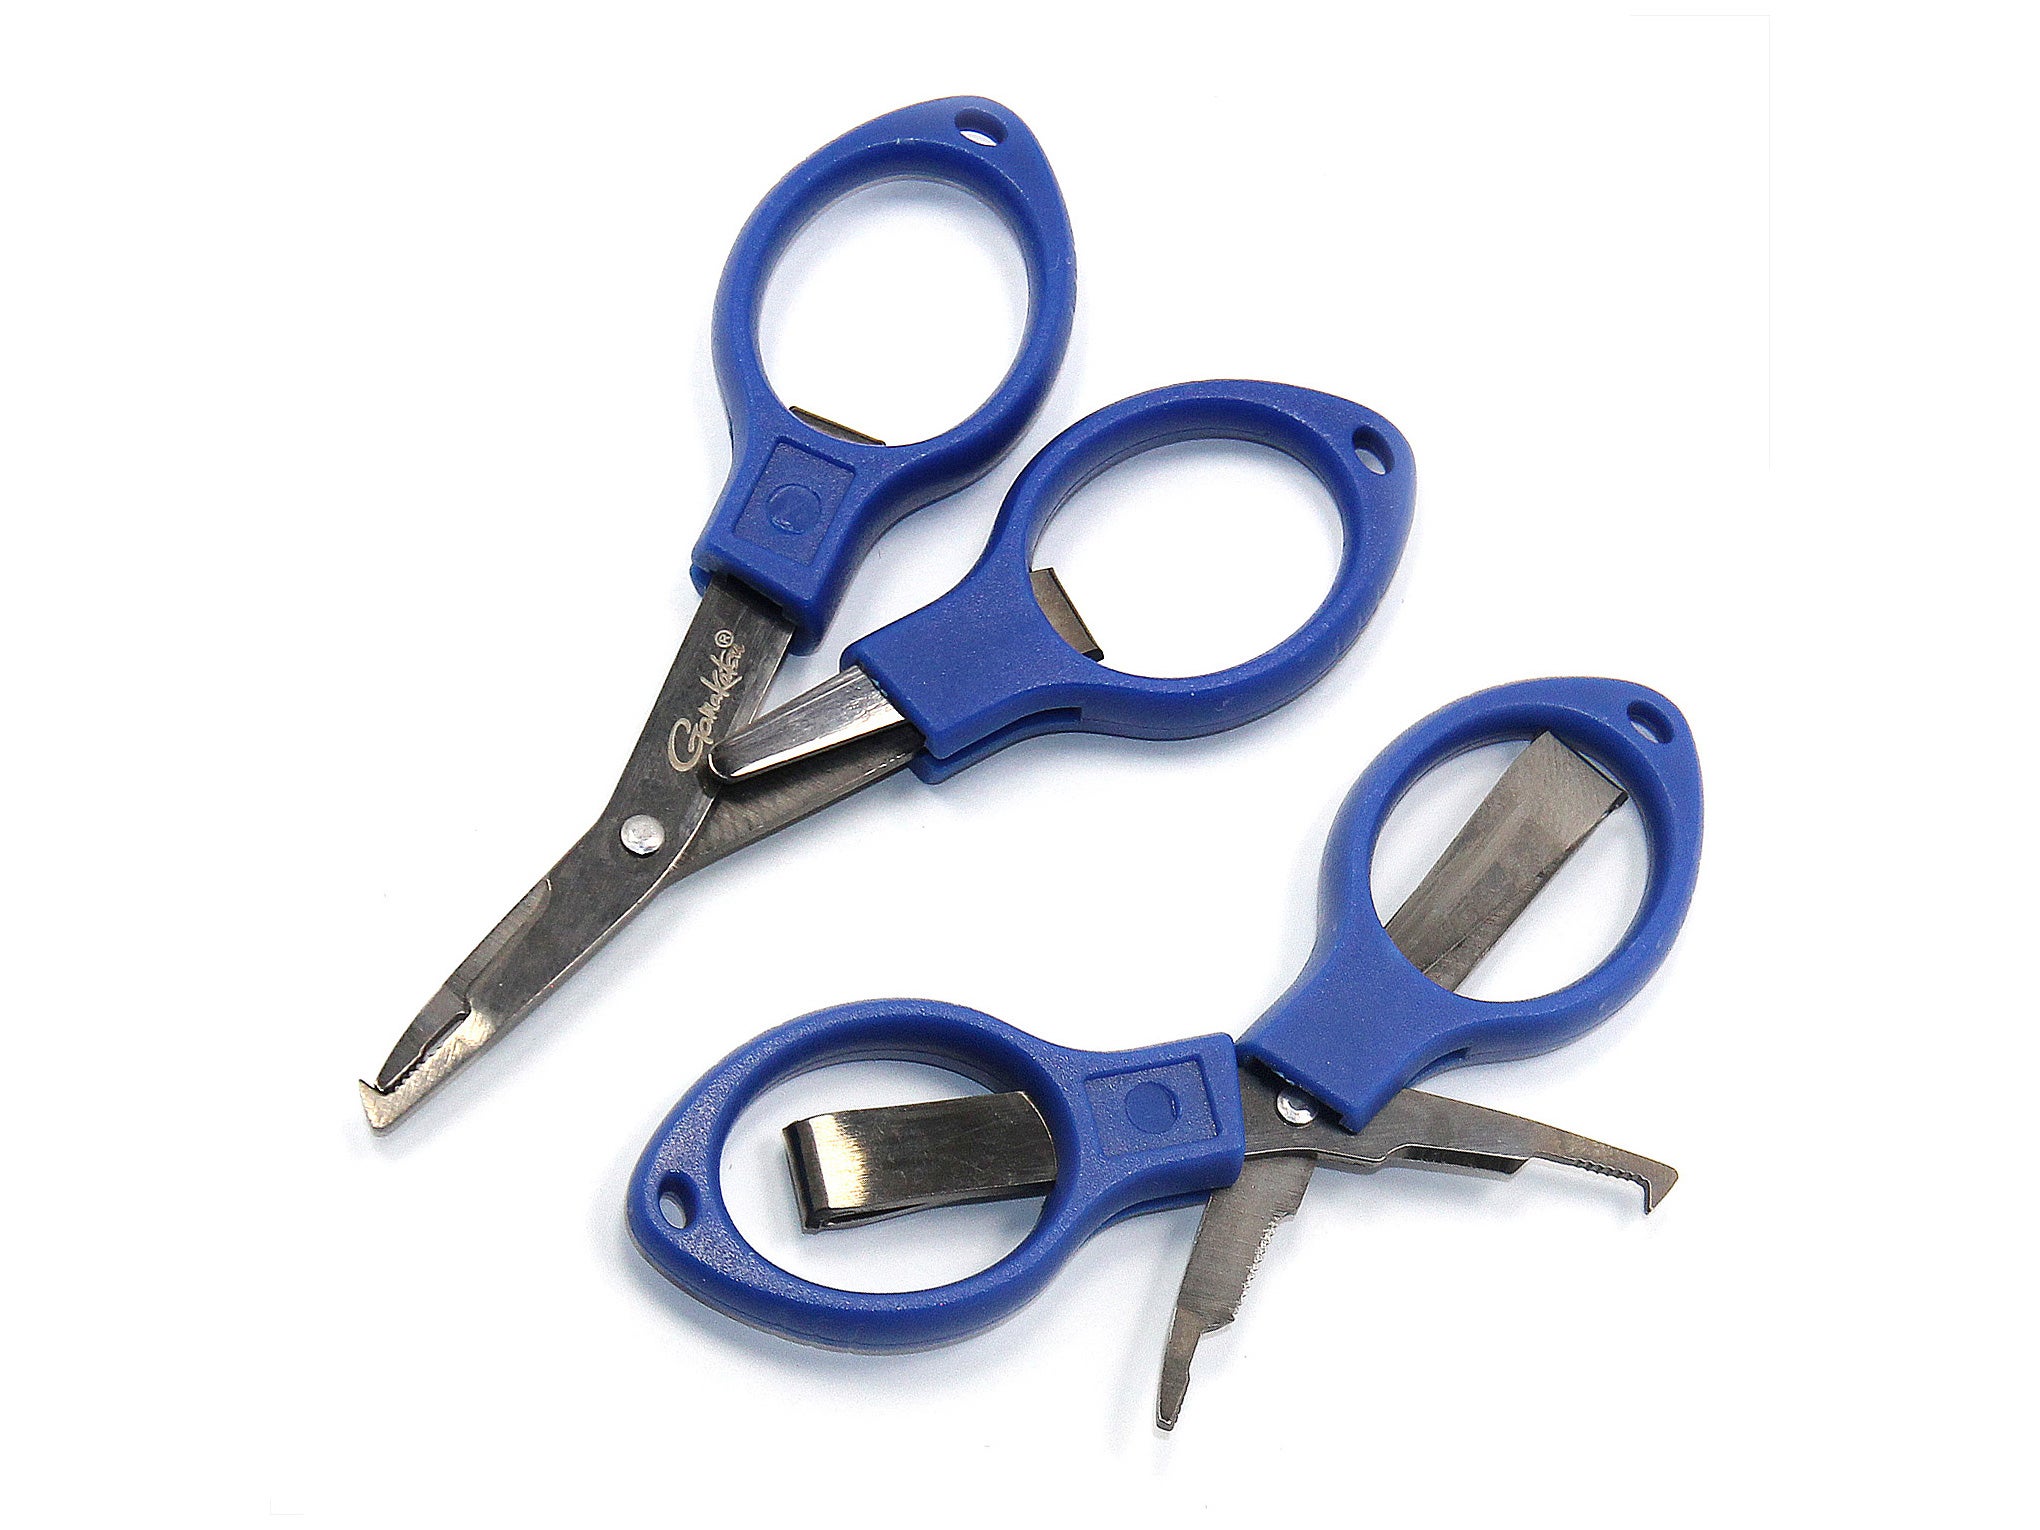 https://summerlandoutdoors.com/wp-content/uploads/2021/07/Gamakatsu-Folding-Braid-Scissors.jpg